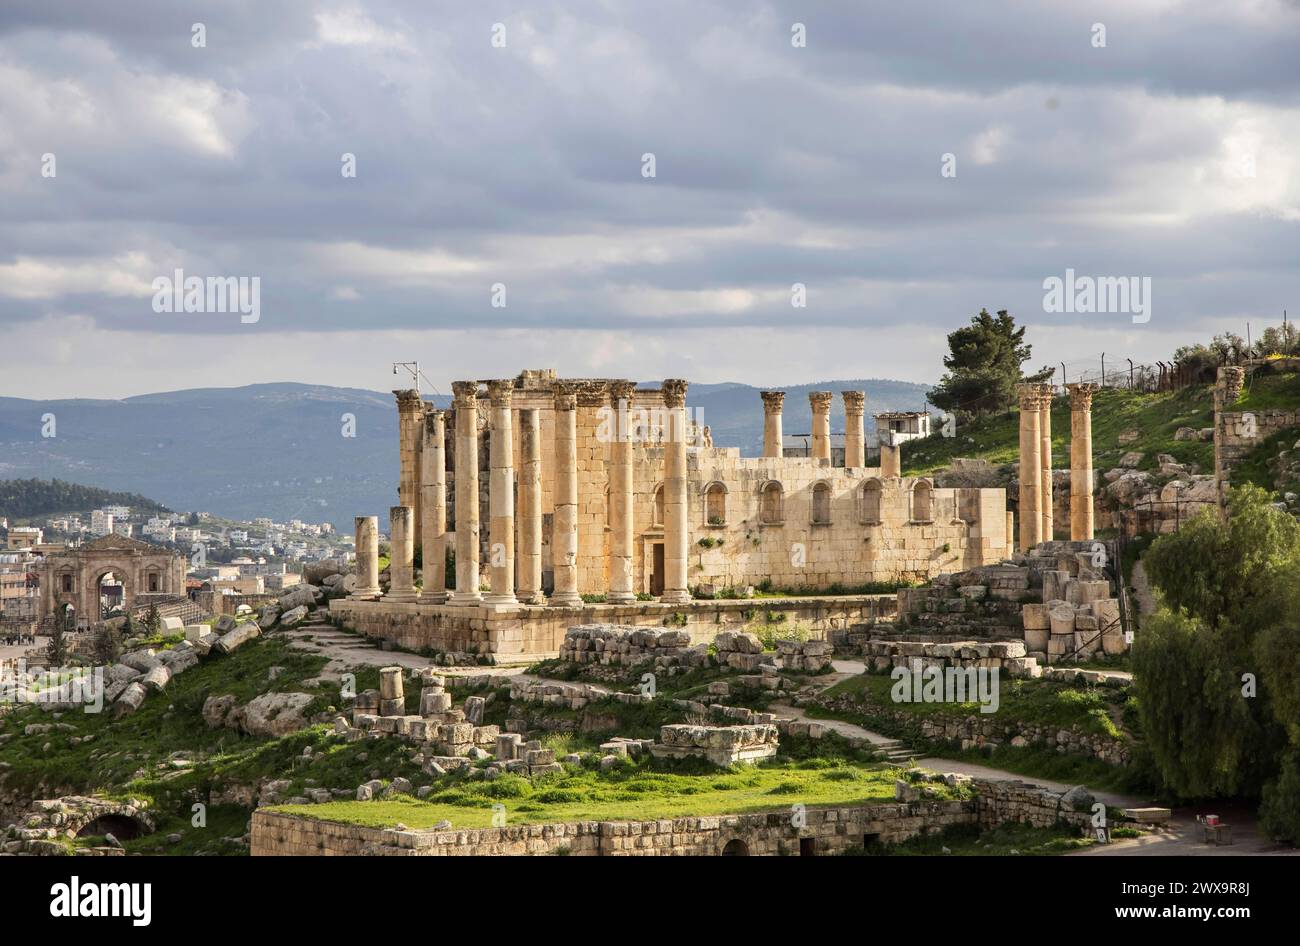 temple of zeus at the greco roman ruins of jerash in jordan Stock Photo